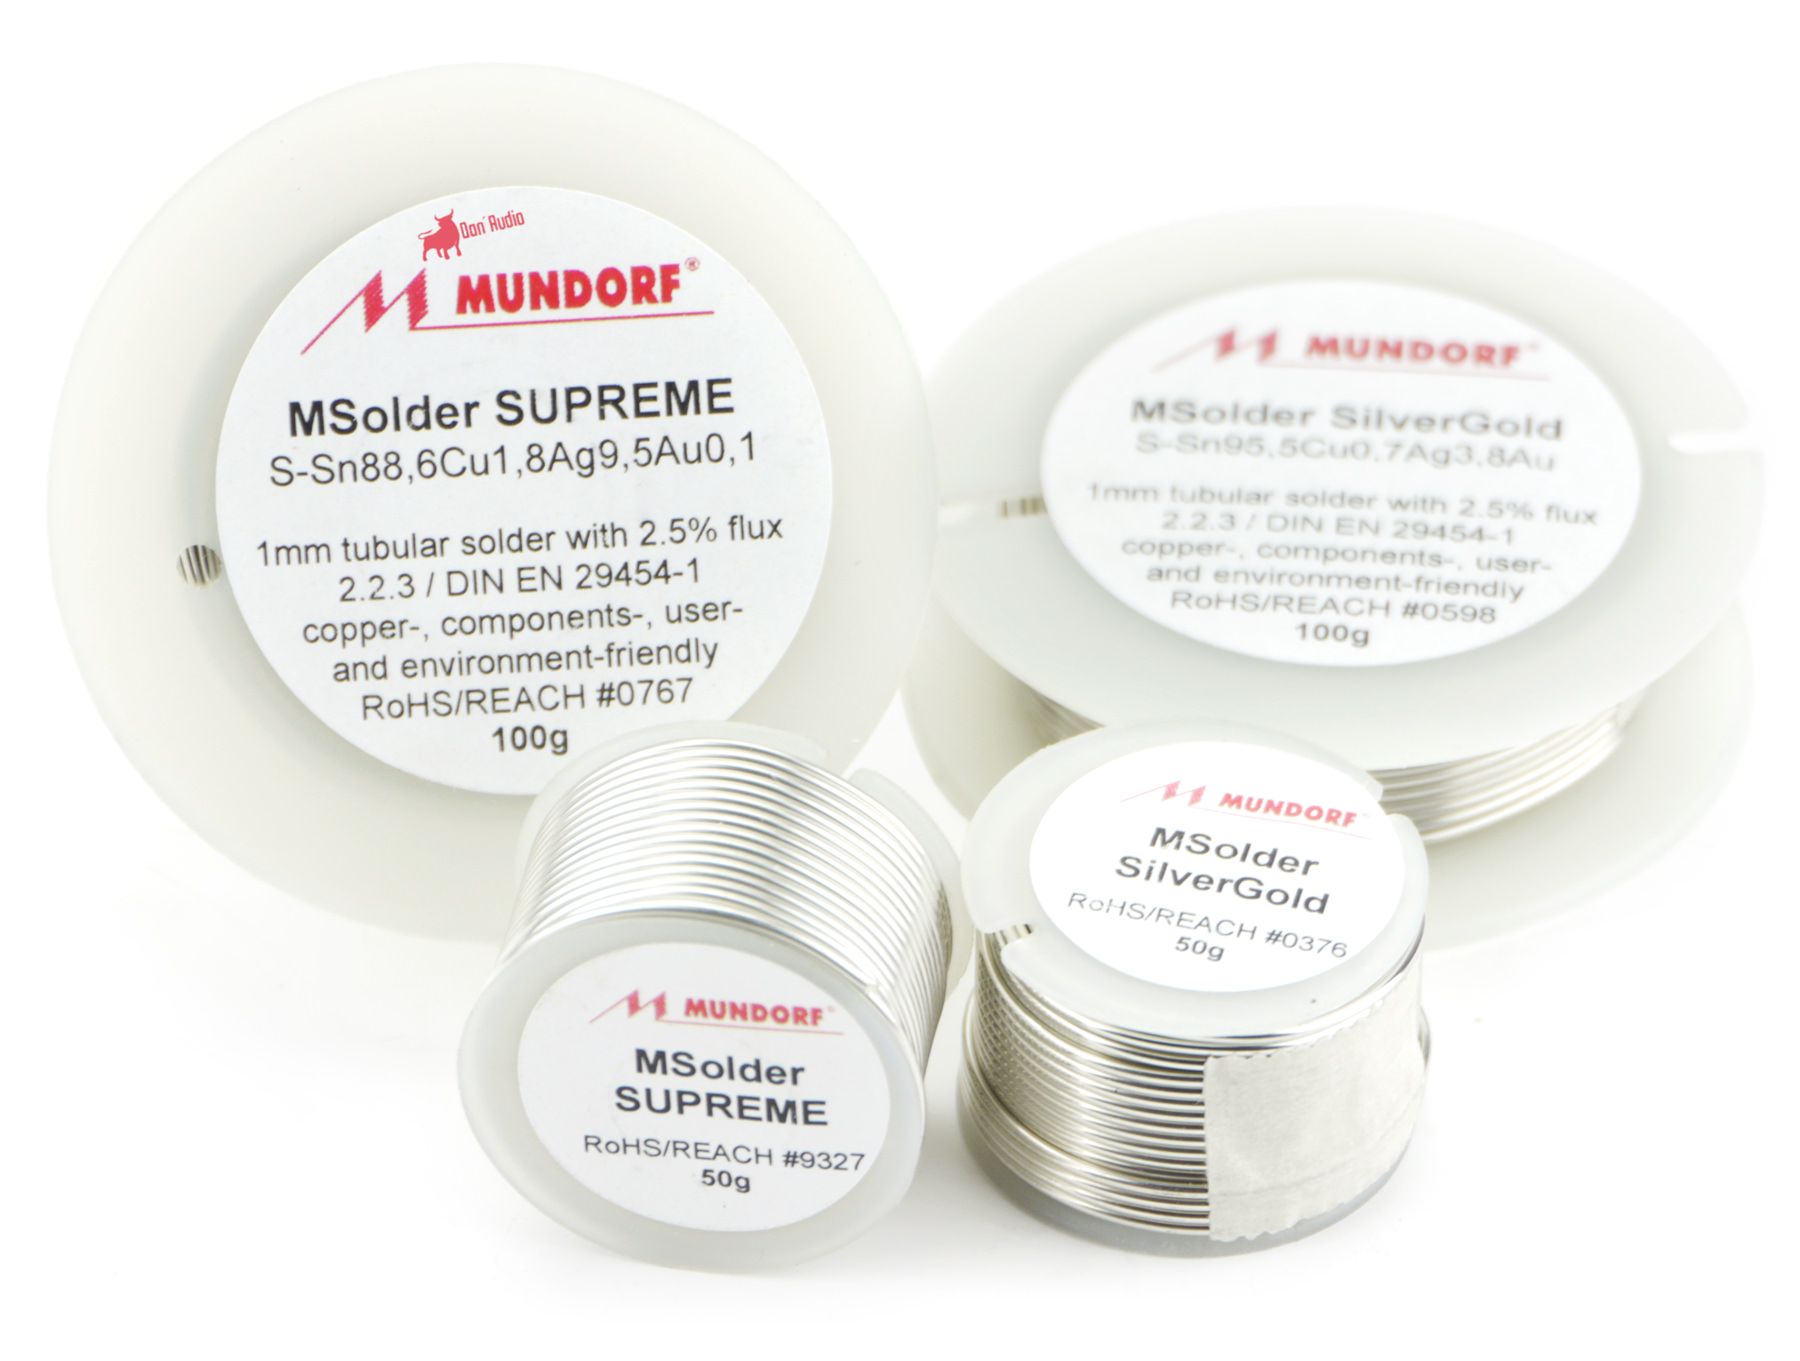 Mundorf Msolder Silver Gold SUPREME